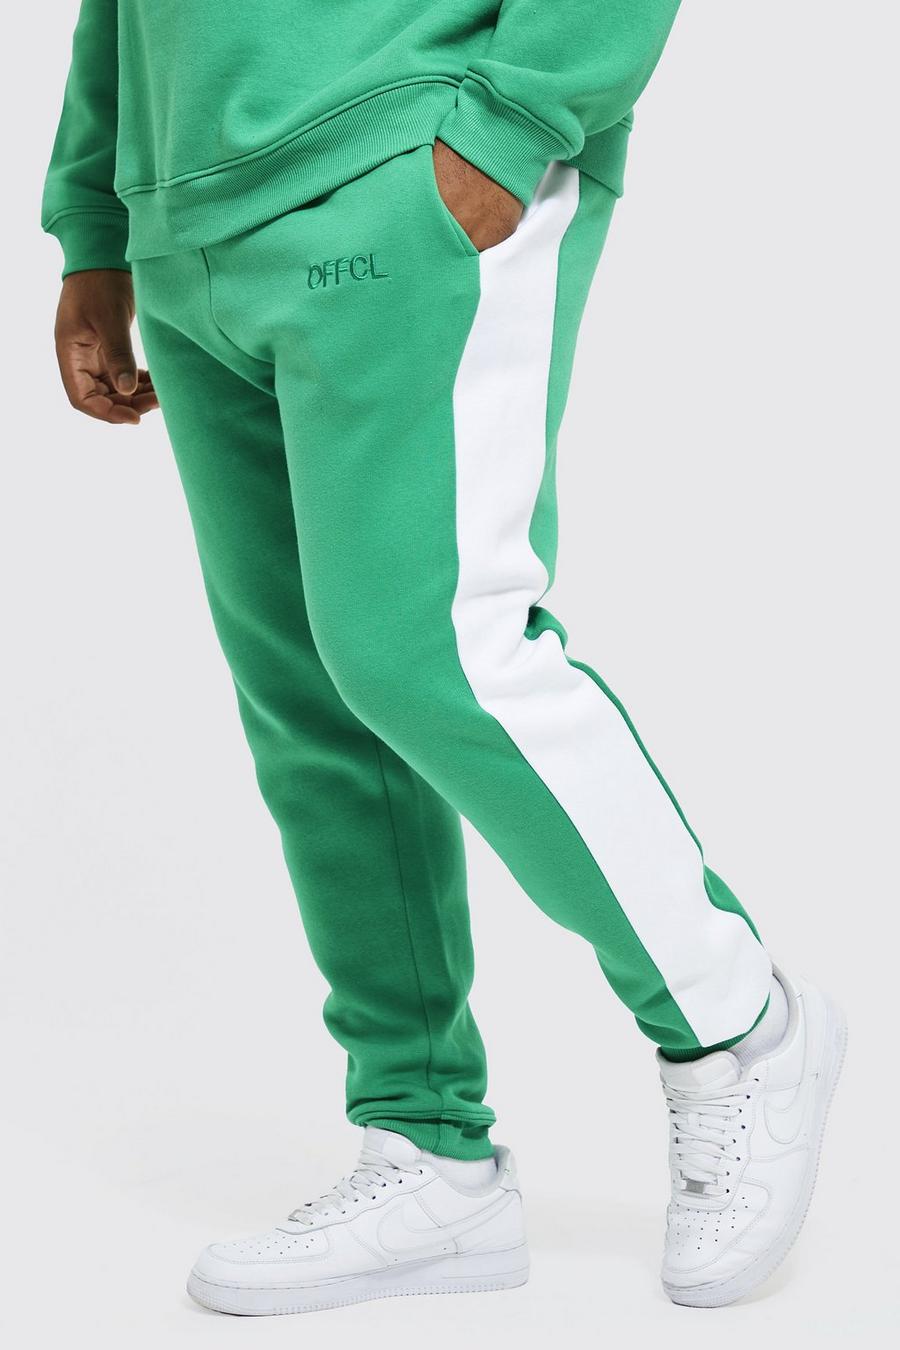 Bright green מכנסי ריצה סקיני עם פאנל בצד וכיתוב Offcl, מידות גדולות